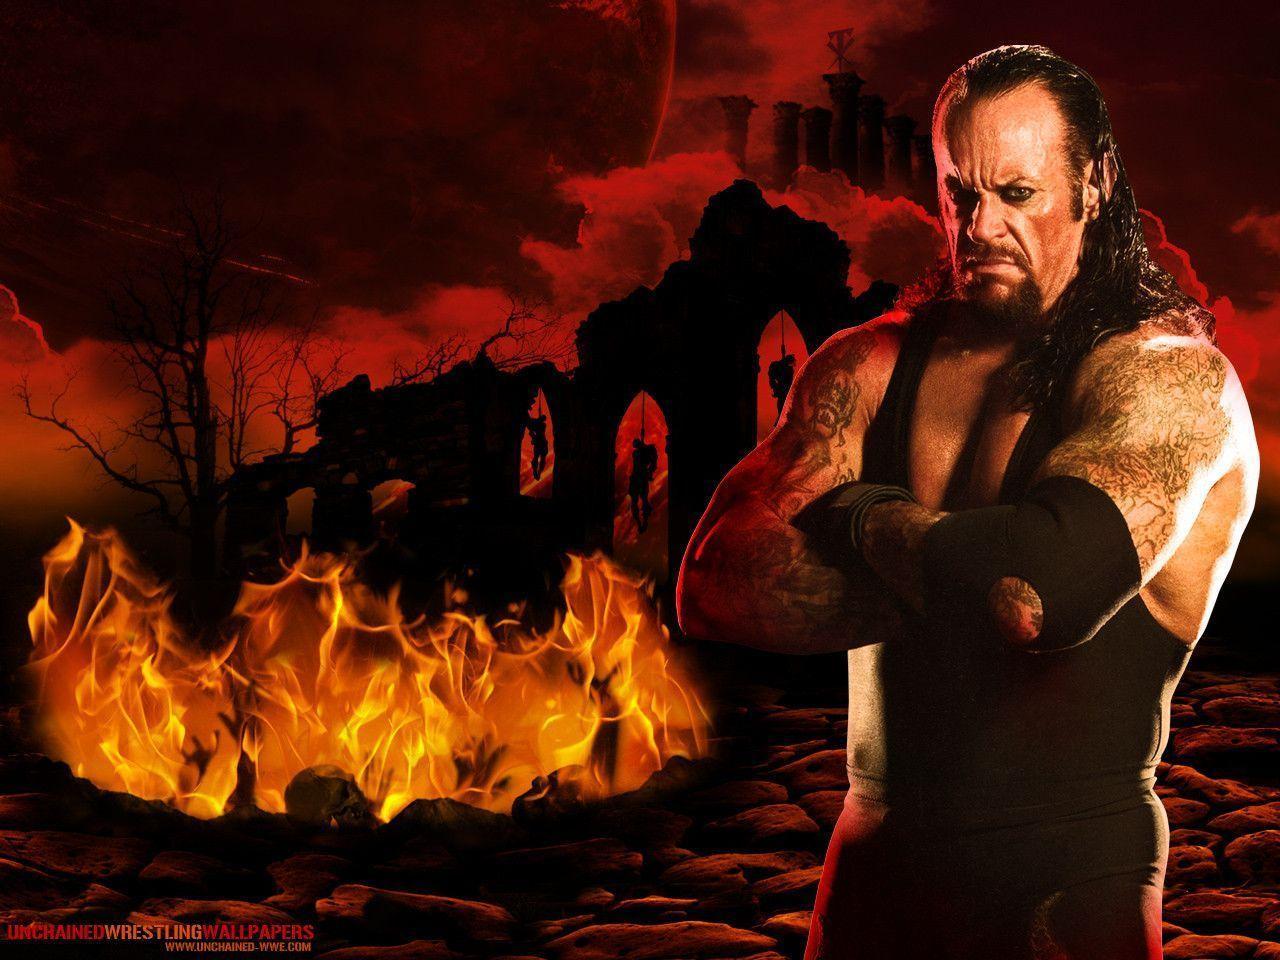 Wallpaper For > Wwe Undertaker And Kane Wallpaper